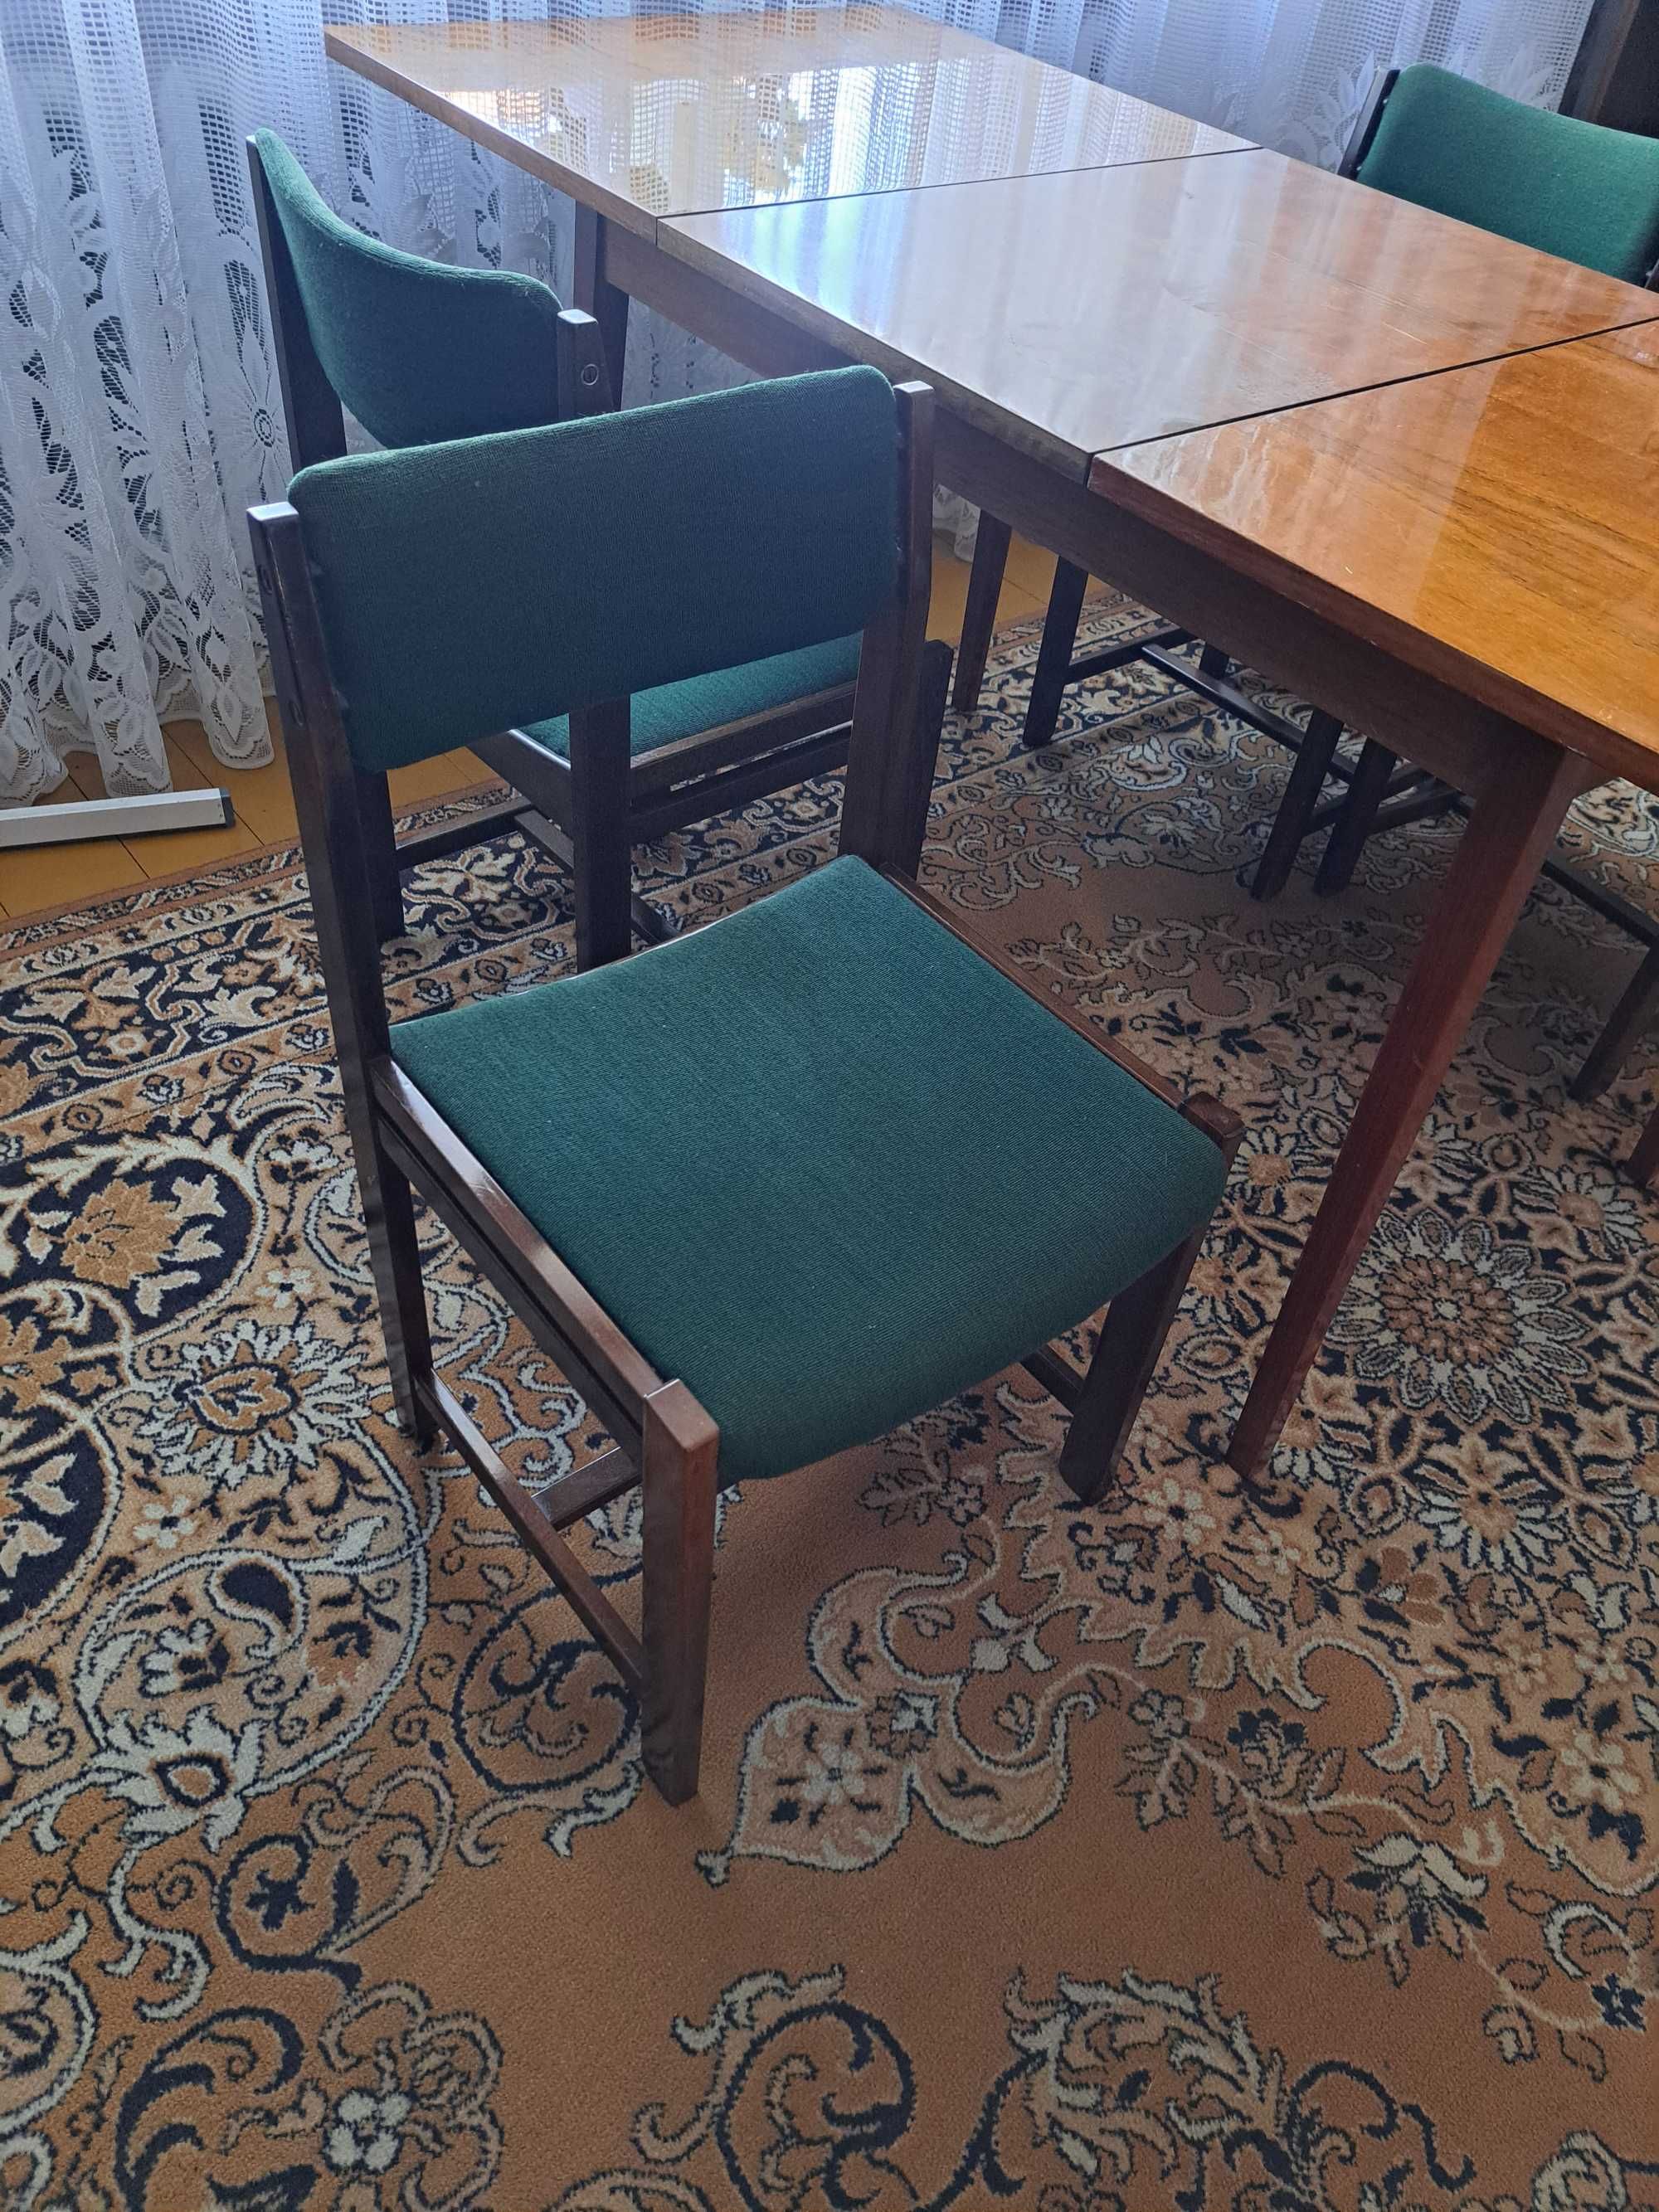 Rozkladany stol w stylu PRL